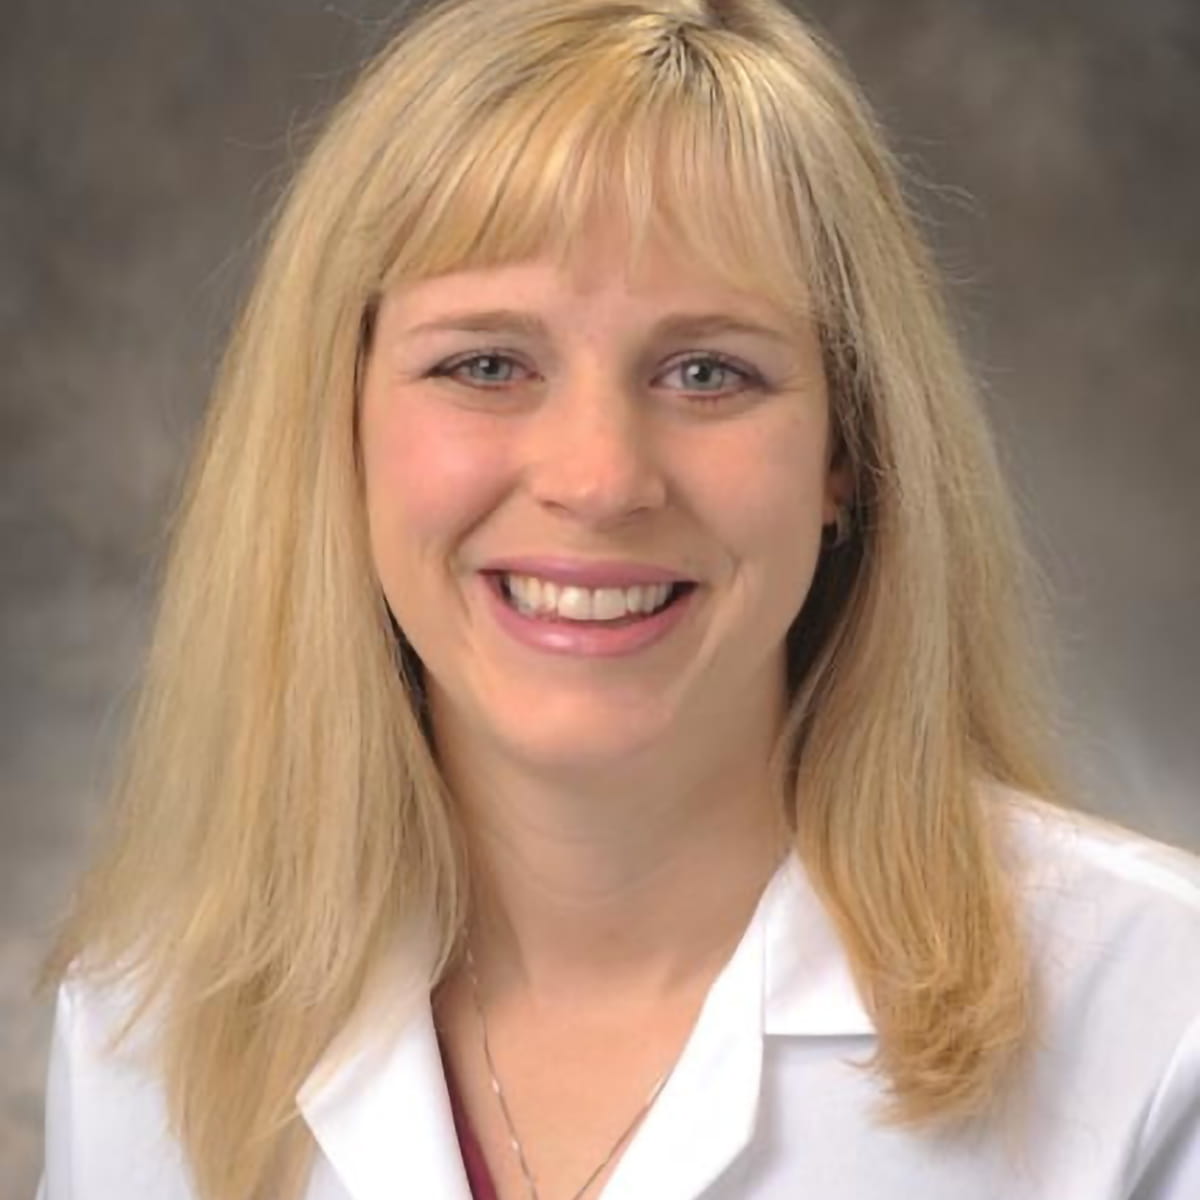 A friendly headshot of Melissa Boekhaus, MD